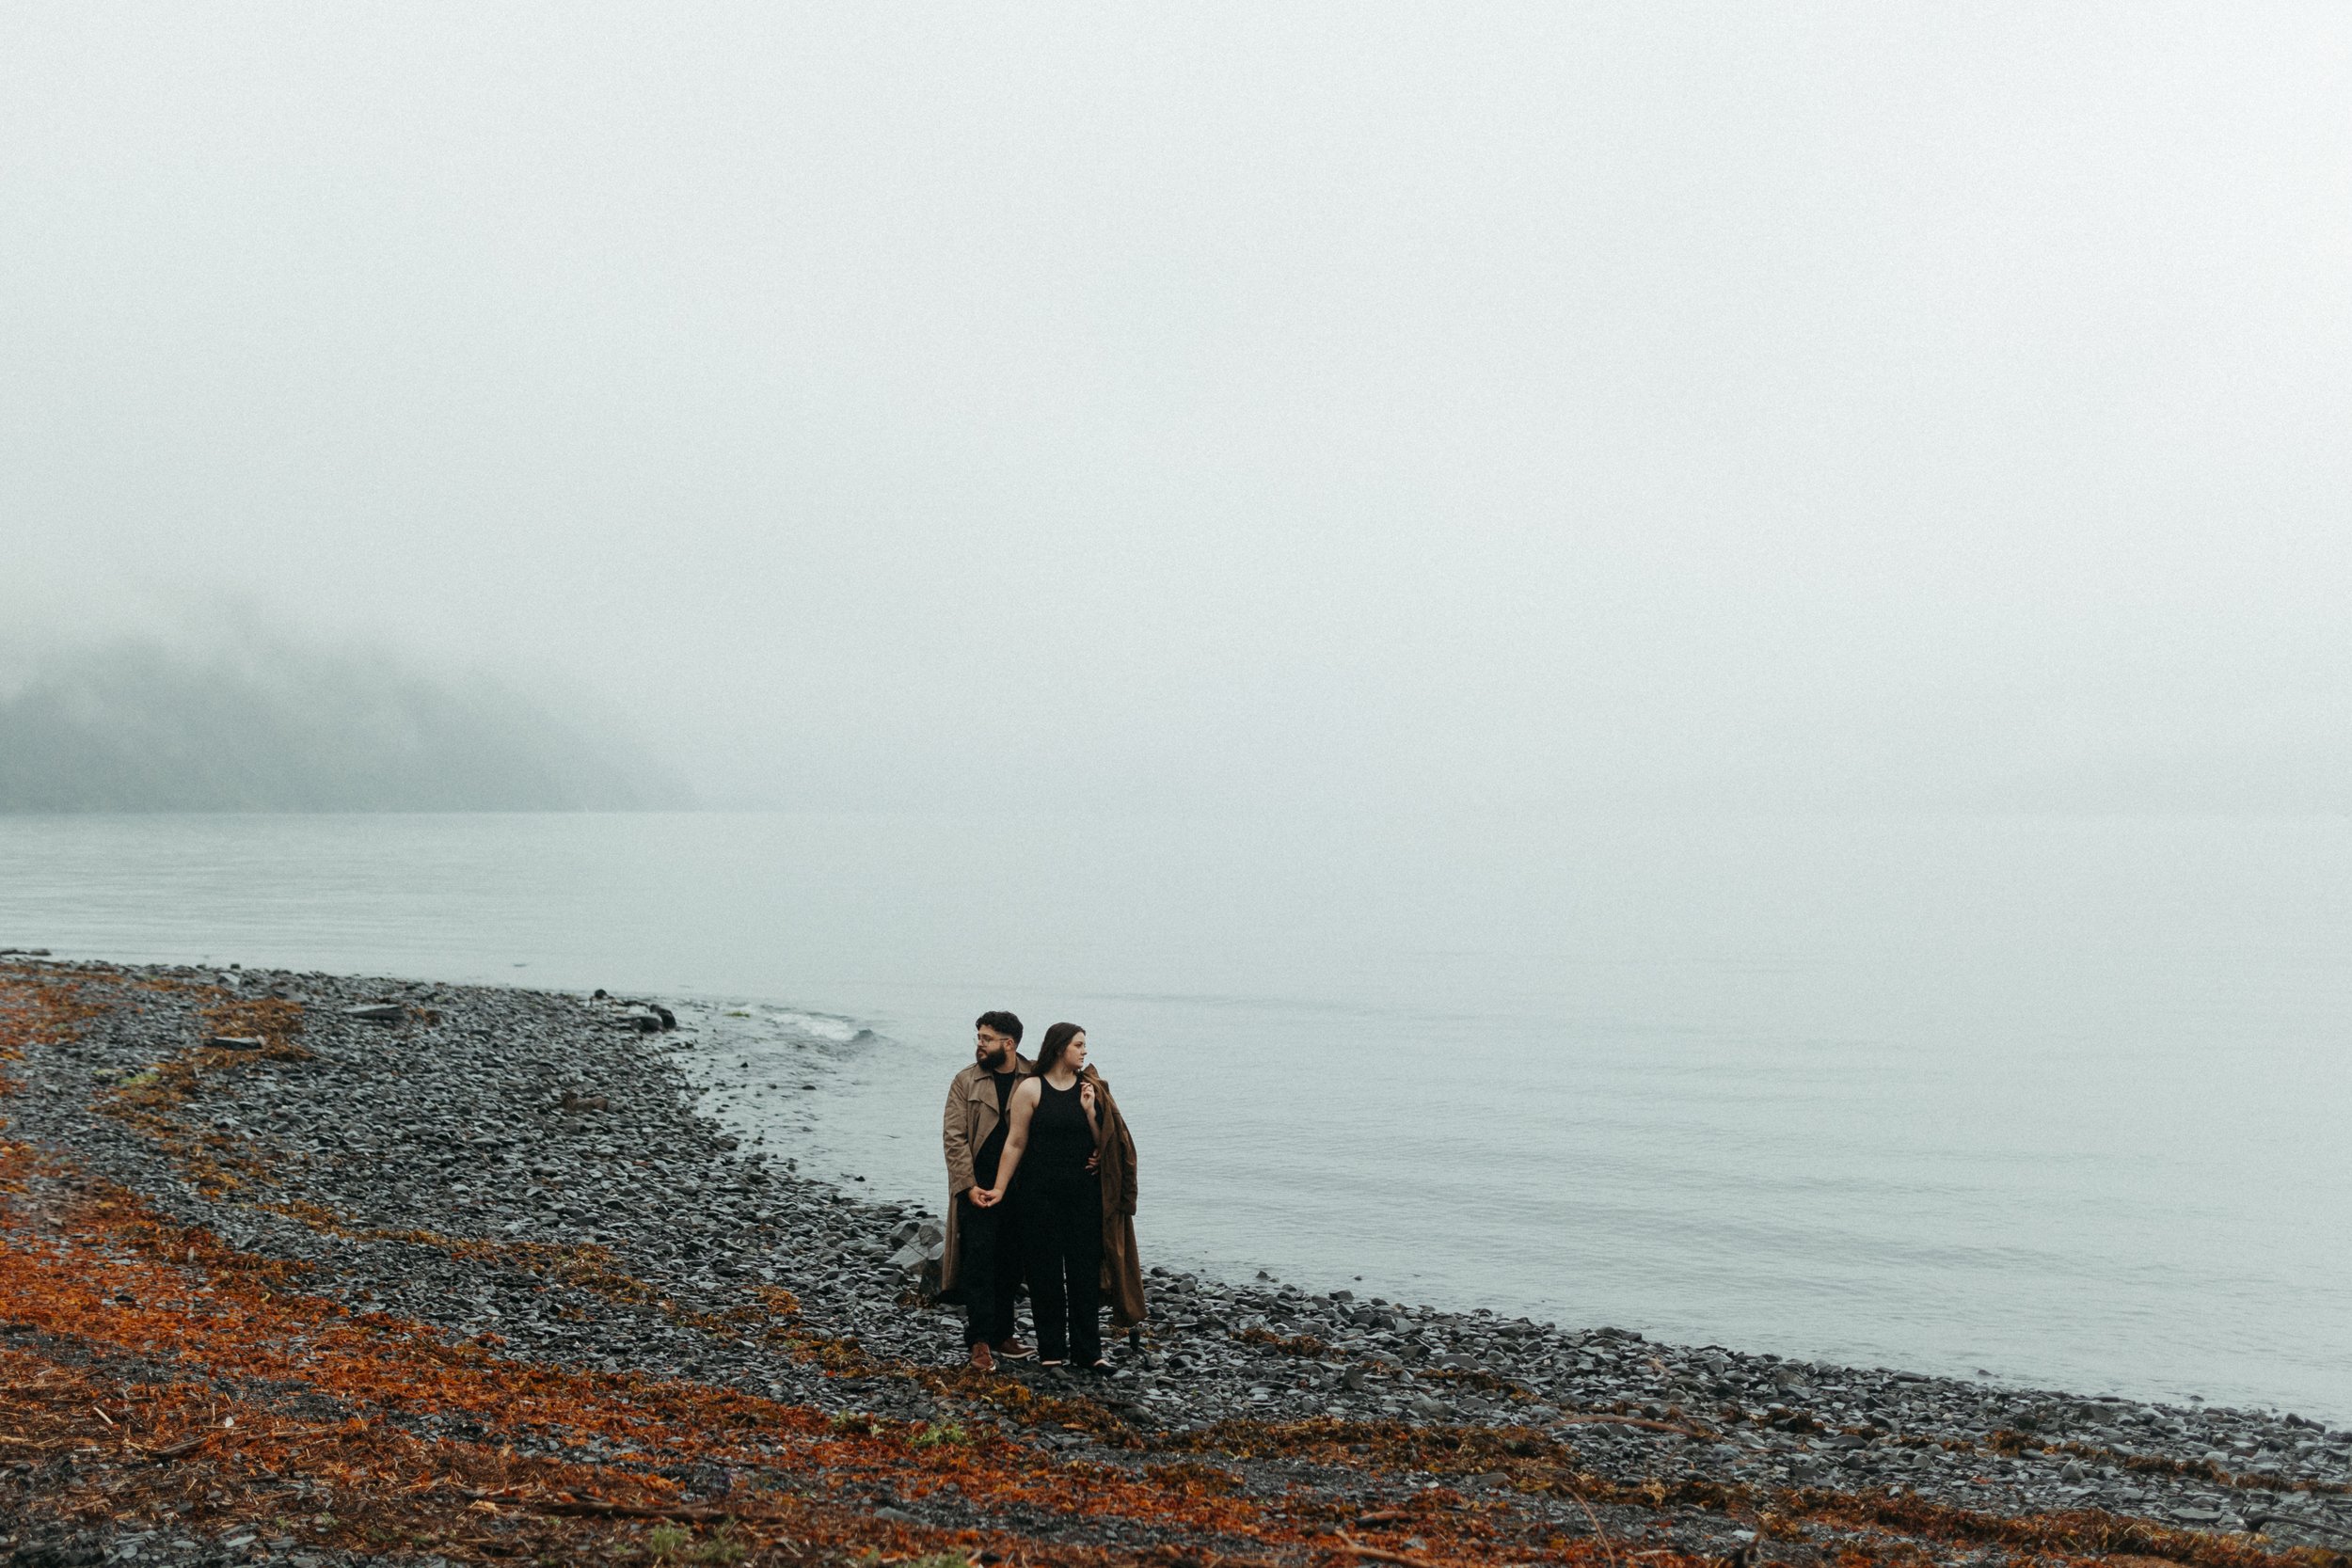 alaska oceanside beach campfire romantic artistic couples photography